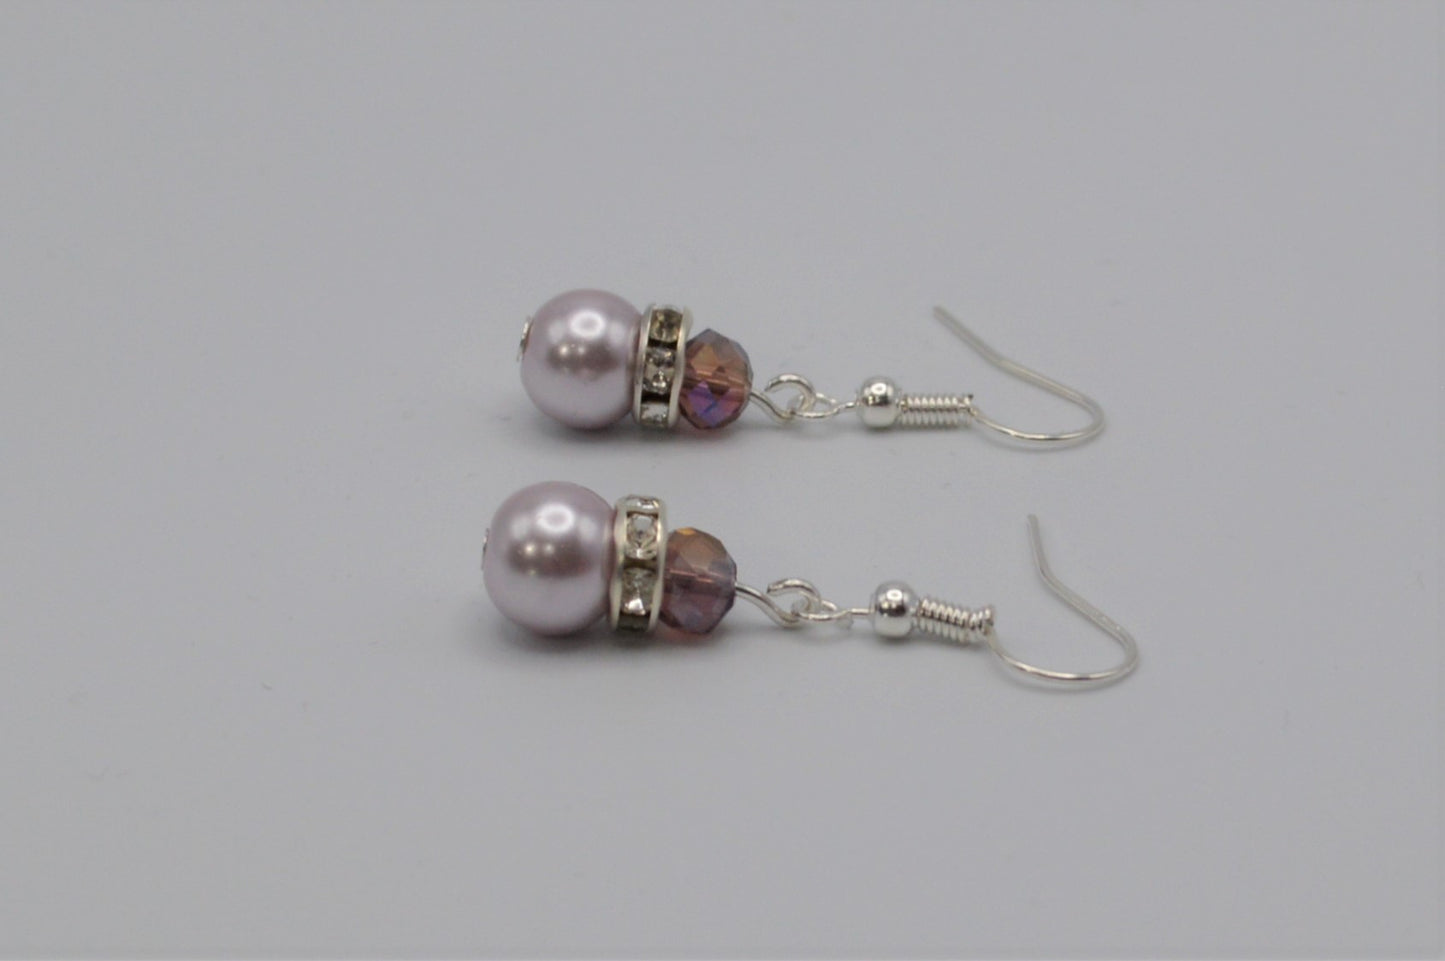 Amethyst Crystals and Lavender Pearl Earrings